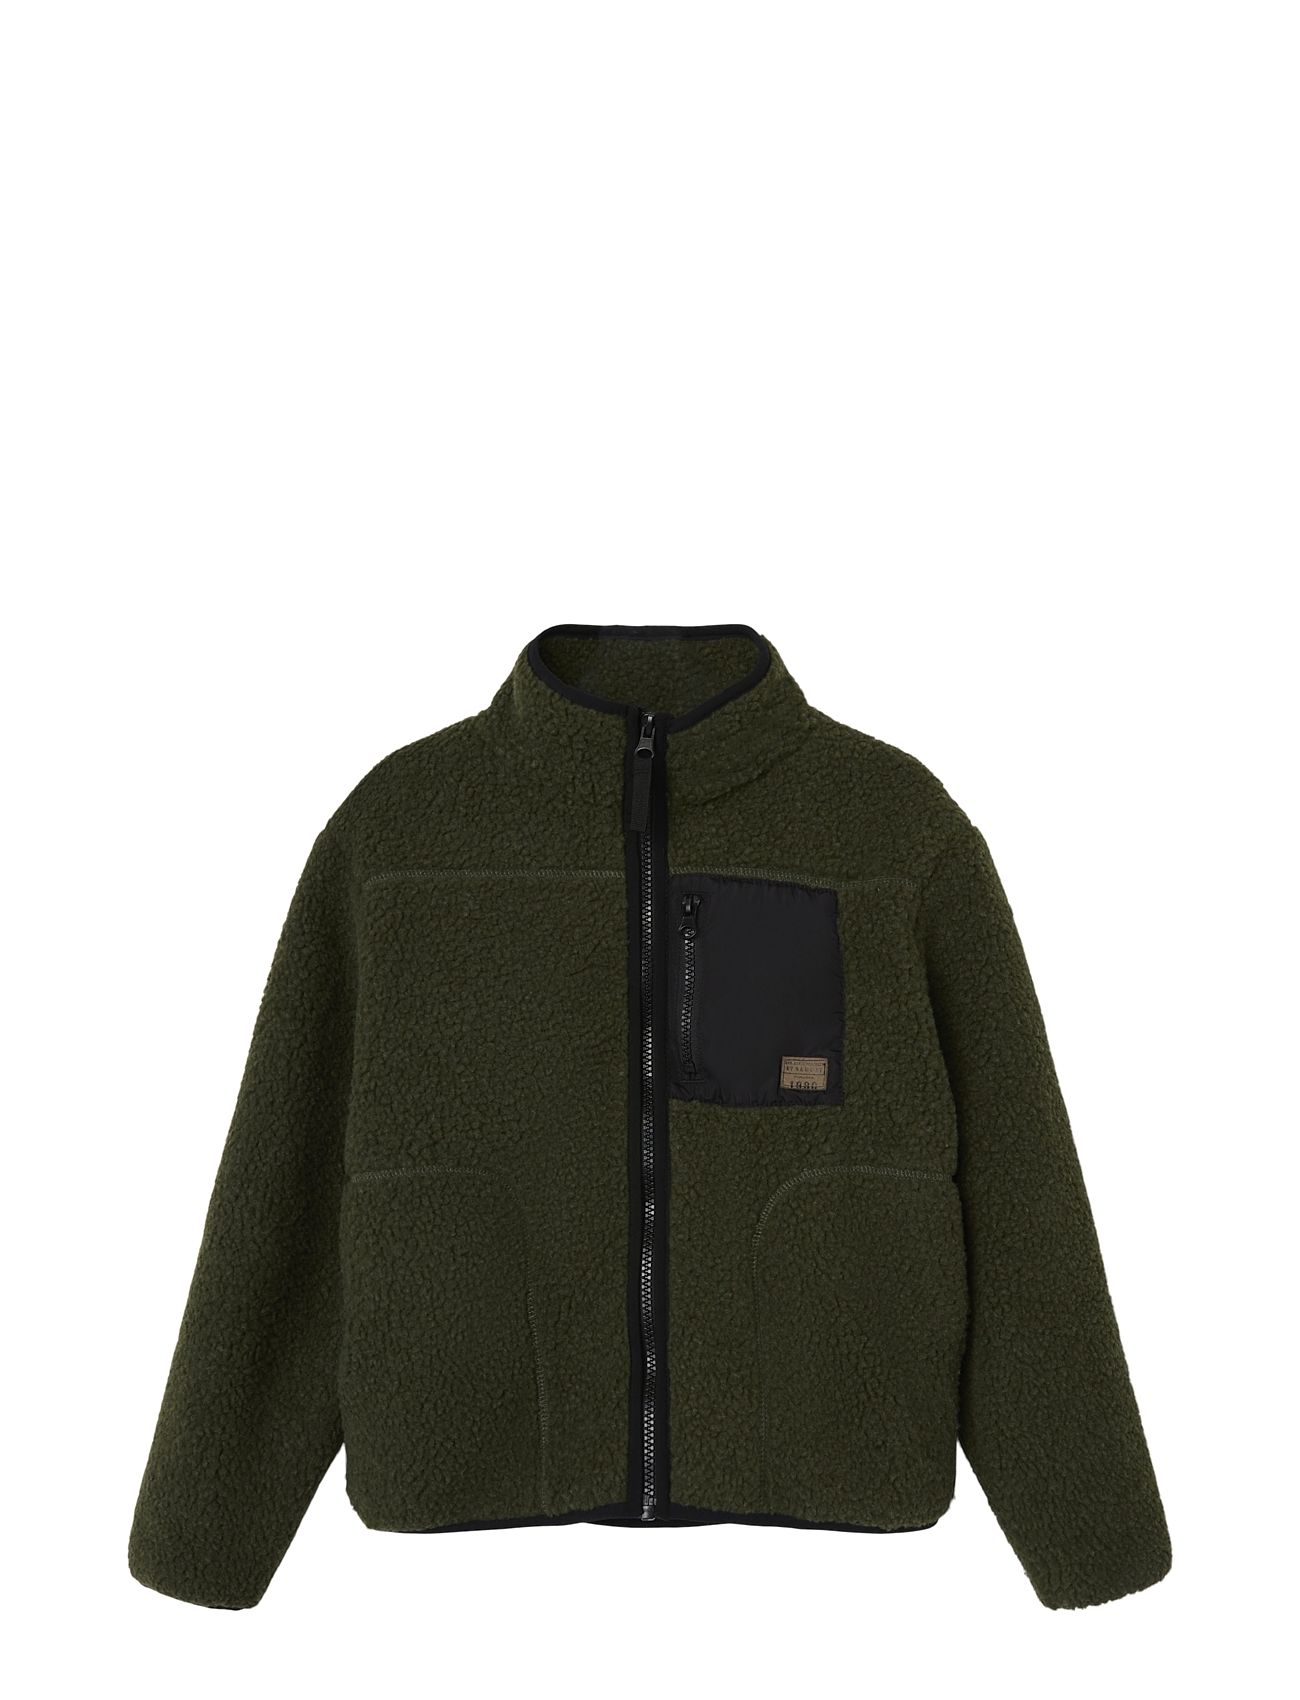 Nkmmagot Teddy Jacket Outerwear Fleece Outerwear Fleece Jackets Khaki Green Name It